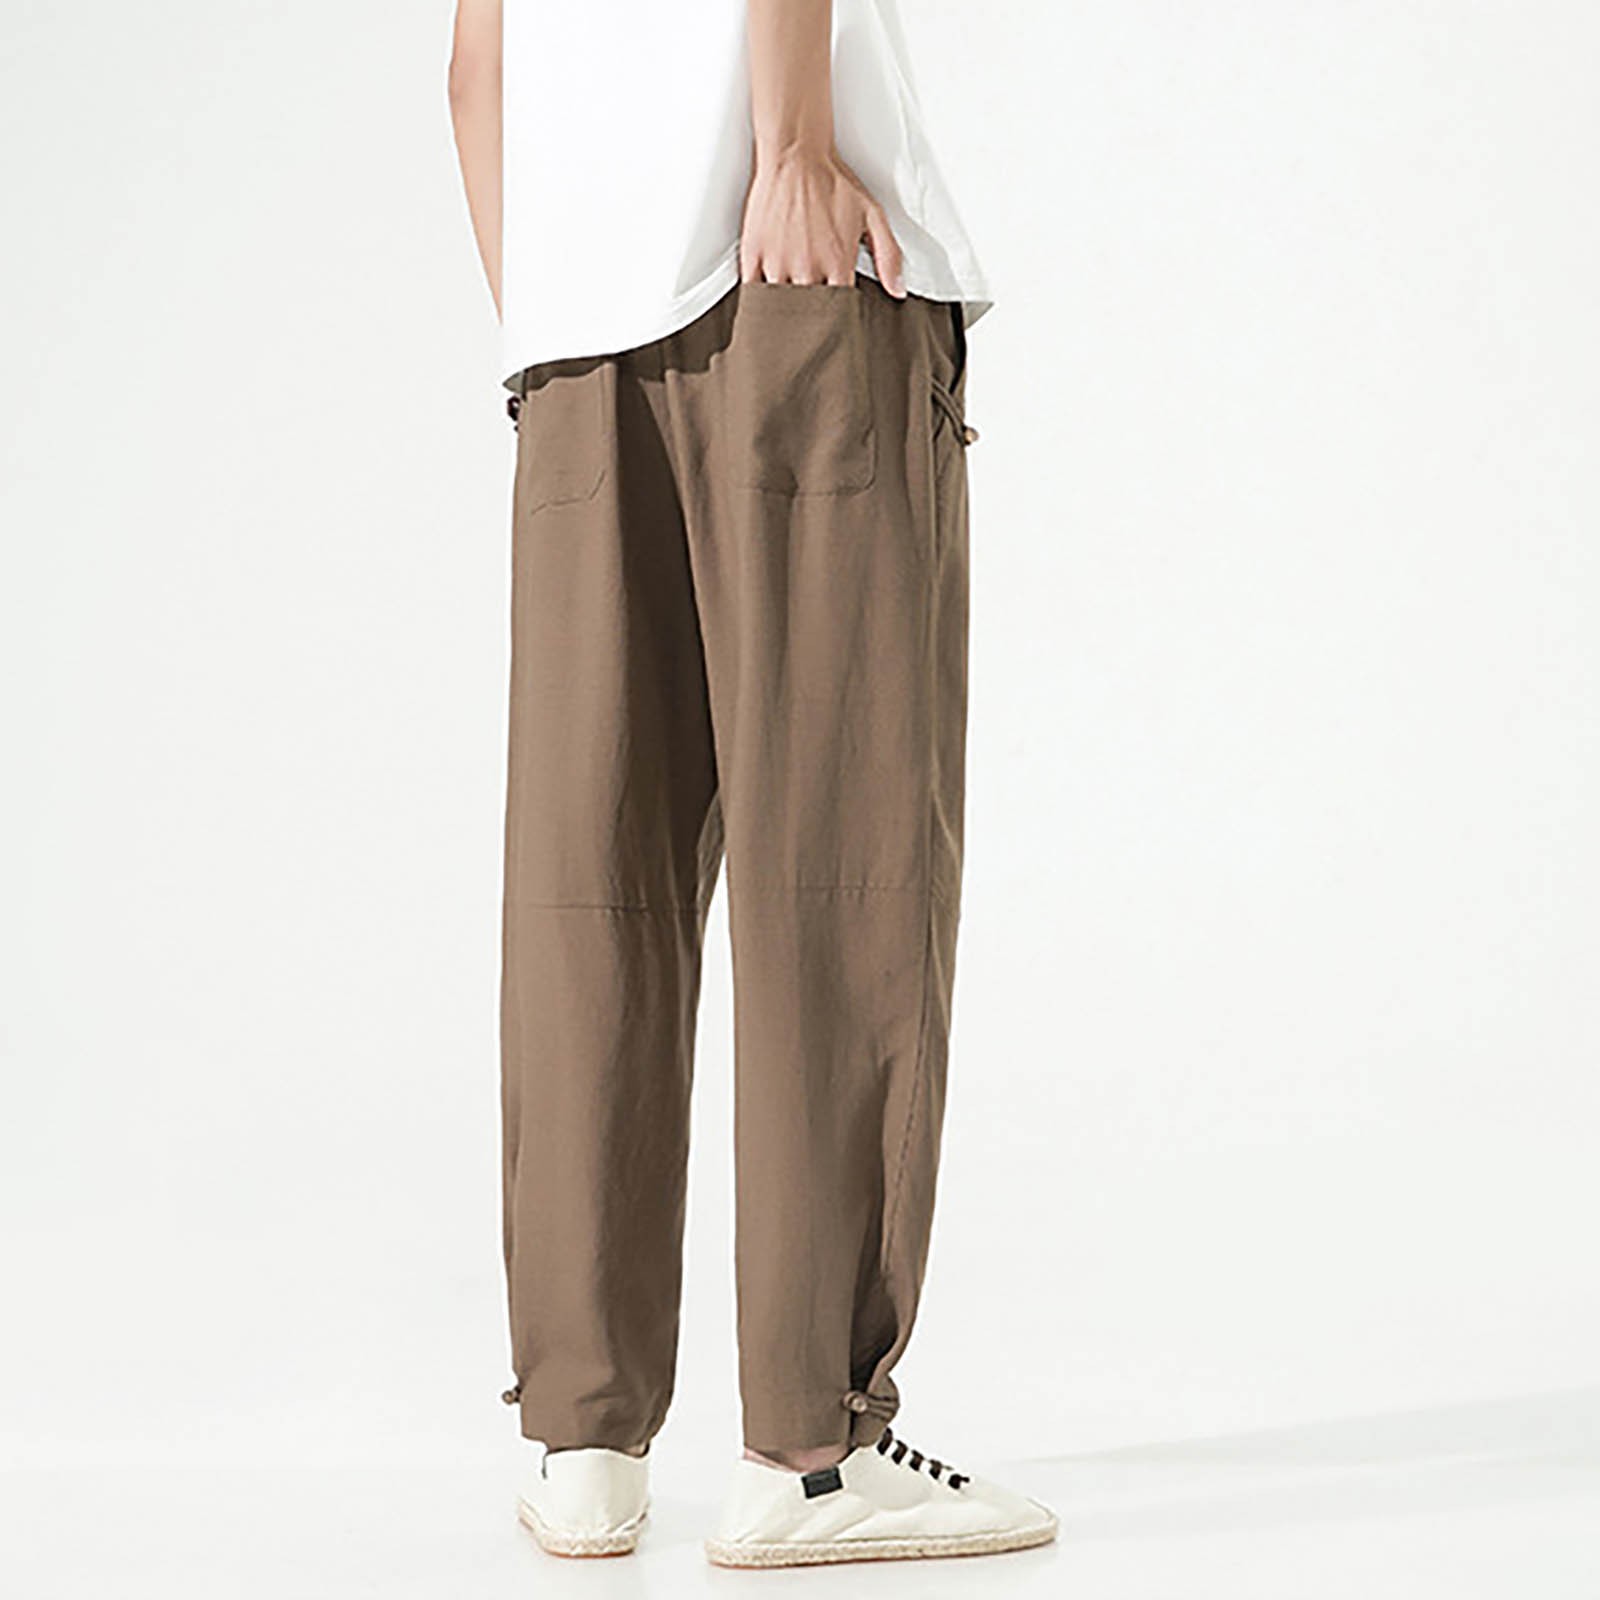 YUHAOTIN Male Casual Pants for Men Slim Fit New Drape Linen Trendy ...